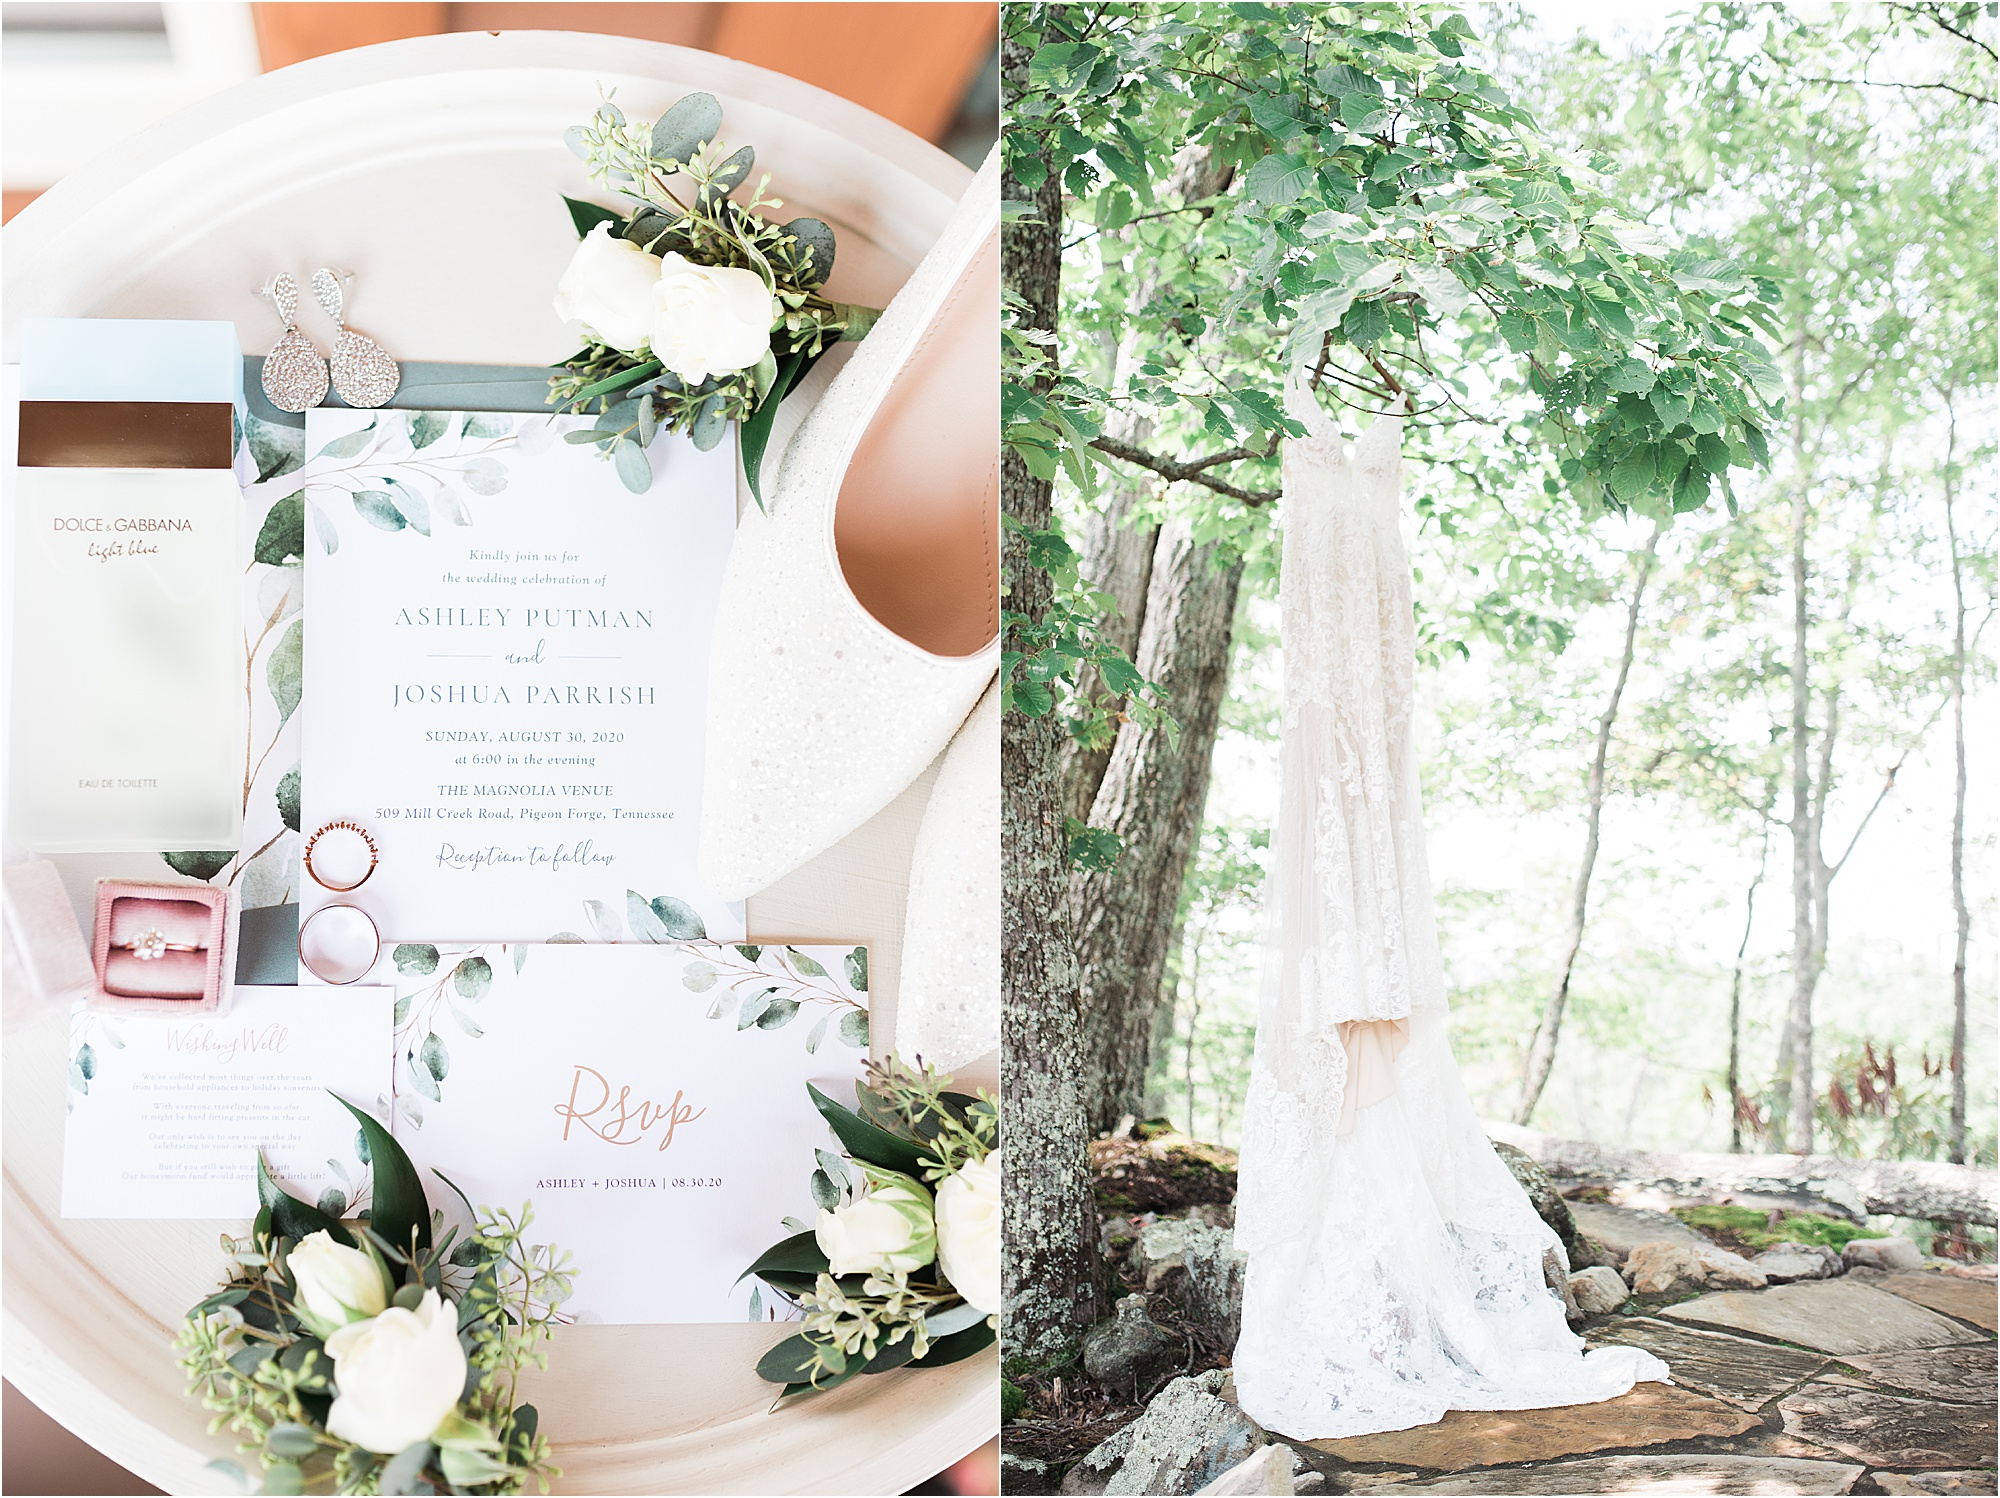 wedding invitations, rings, and wedding dress detail photos